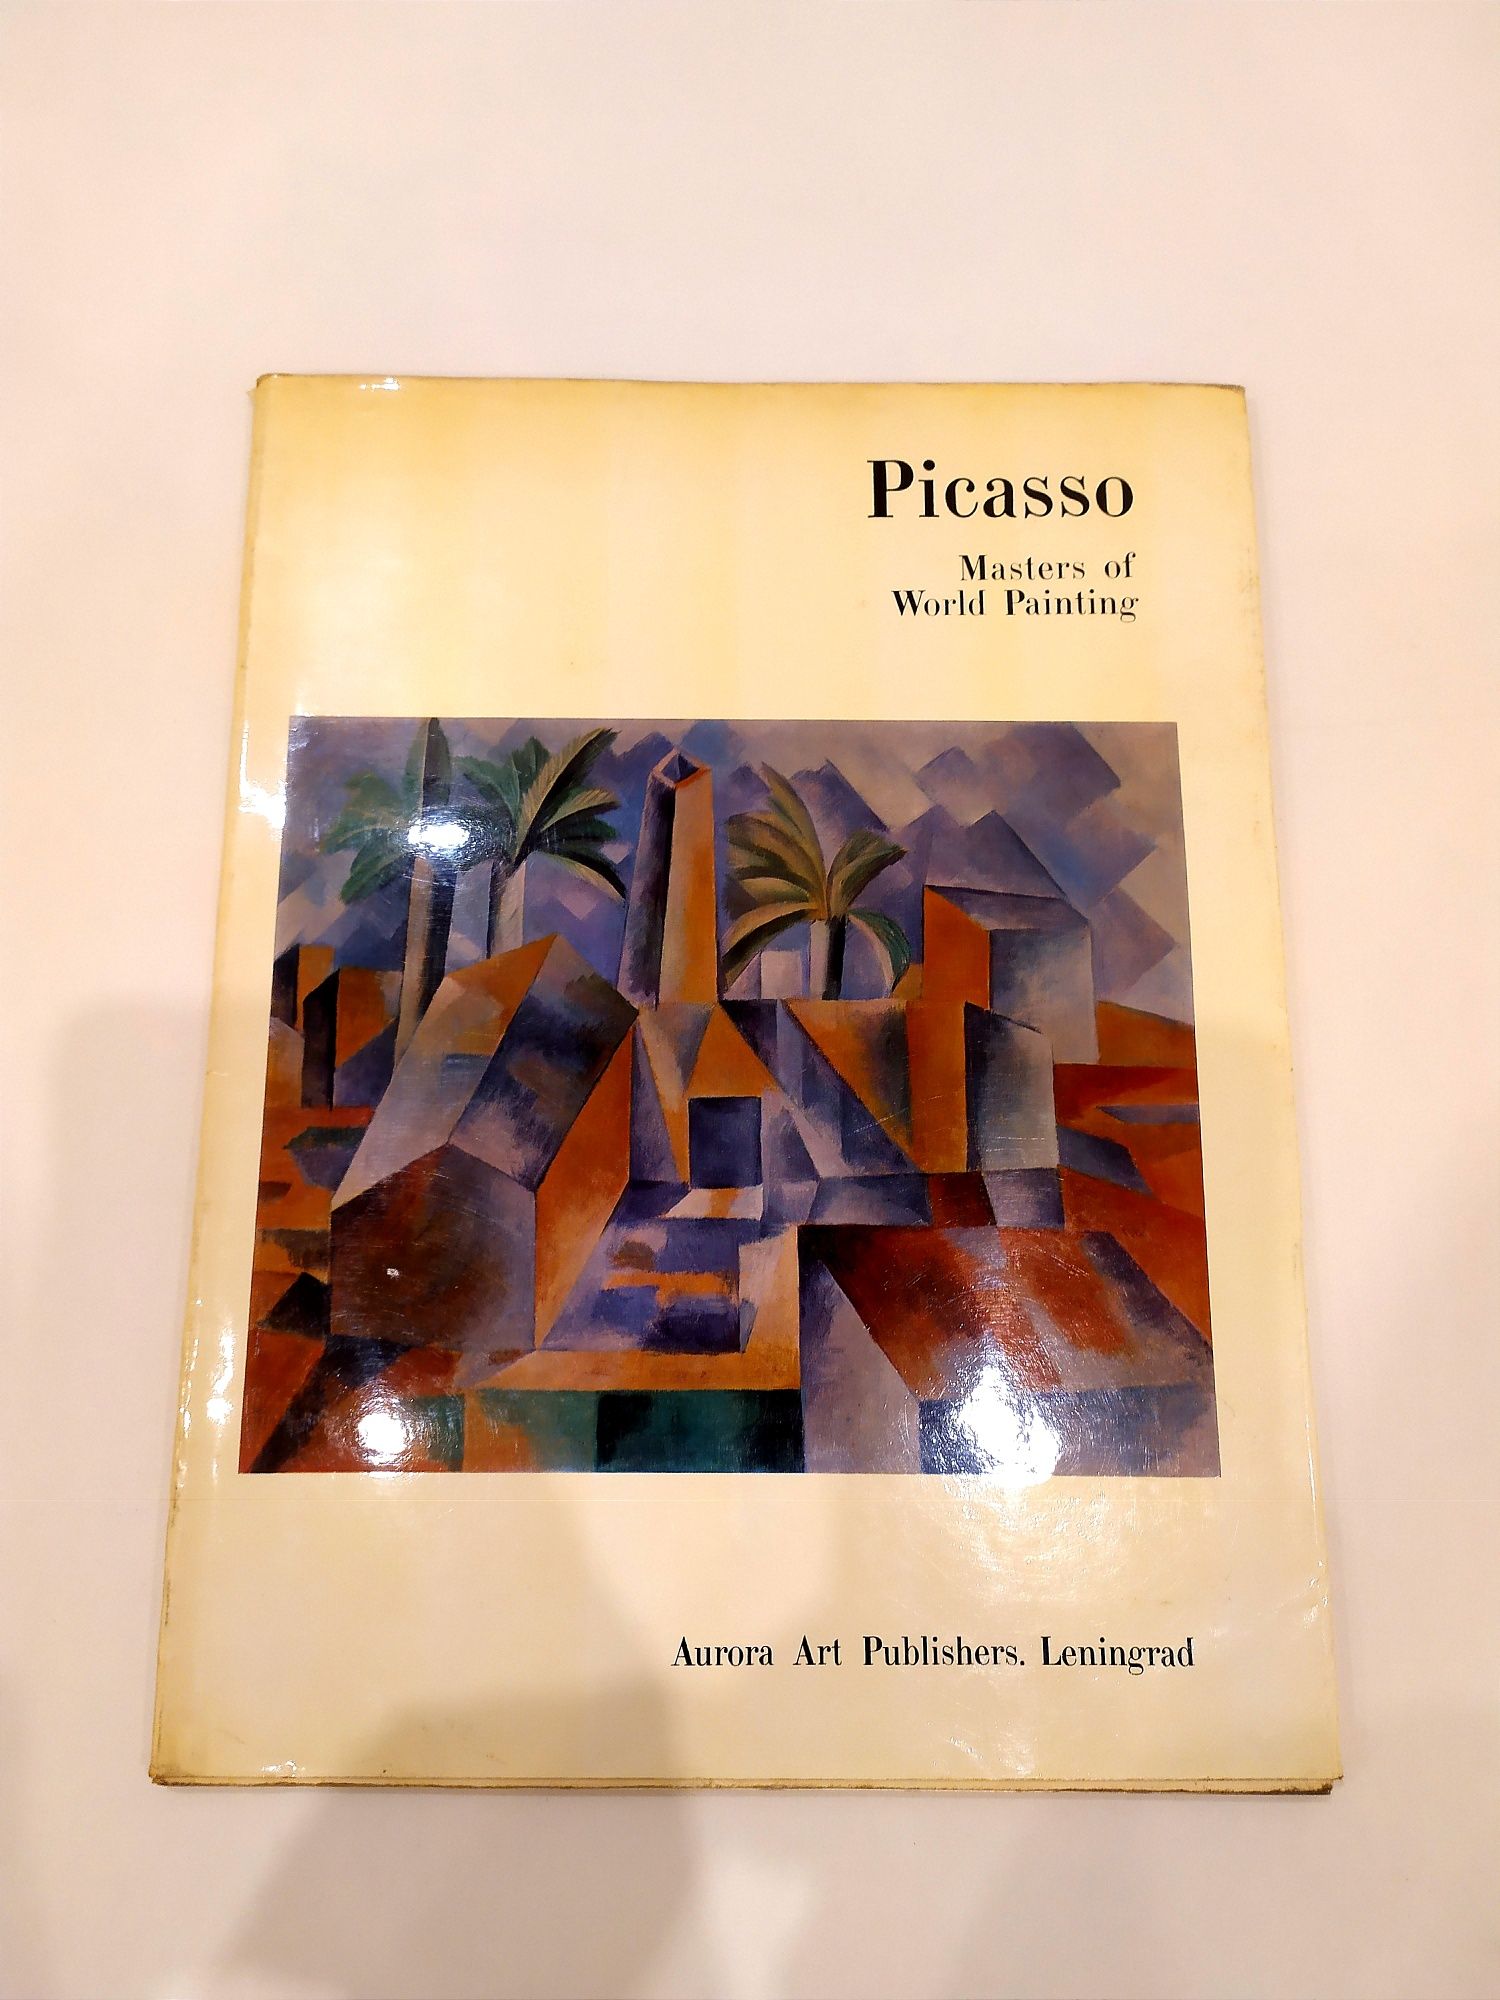 Van Gogh Gauguin Picasso Pissarro Watteau Pirosmani